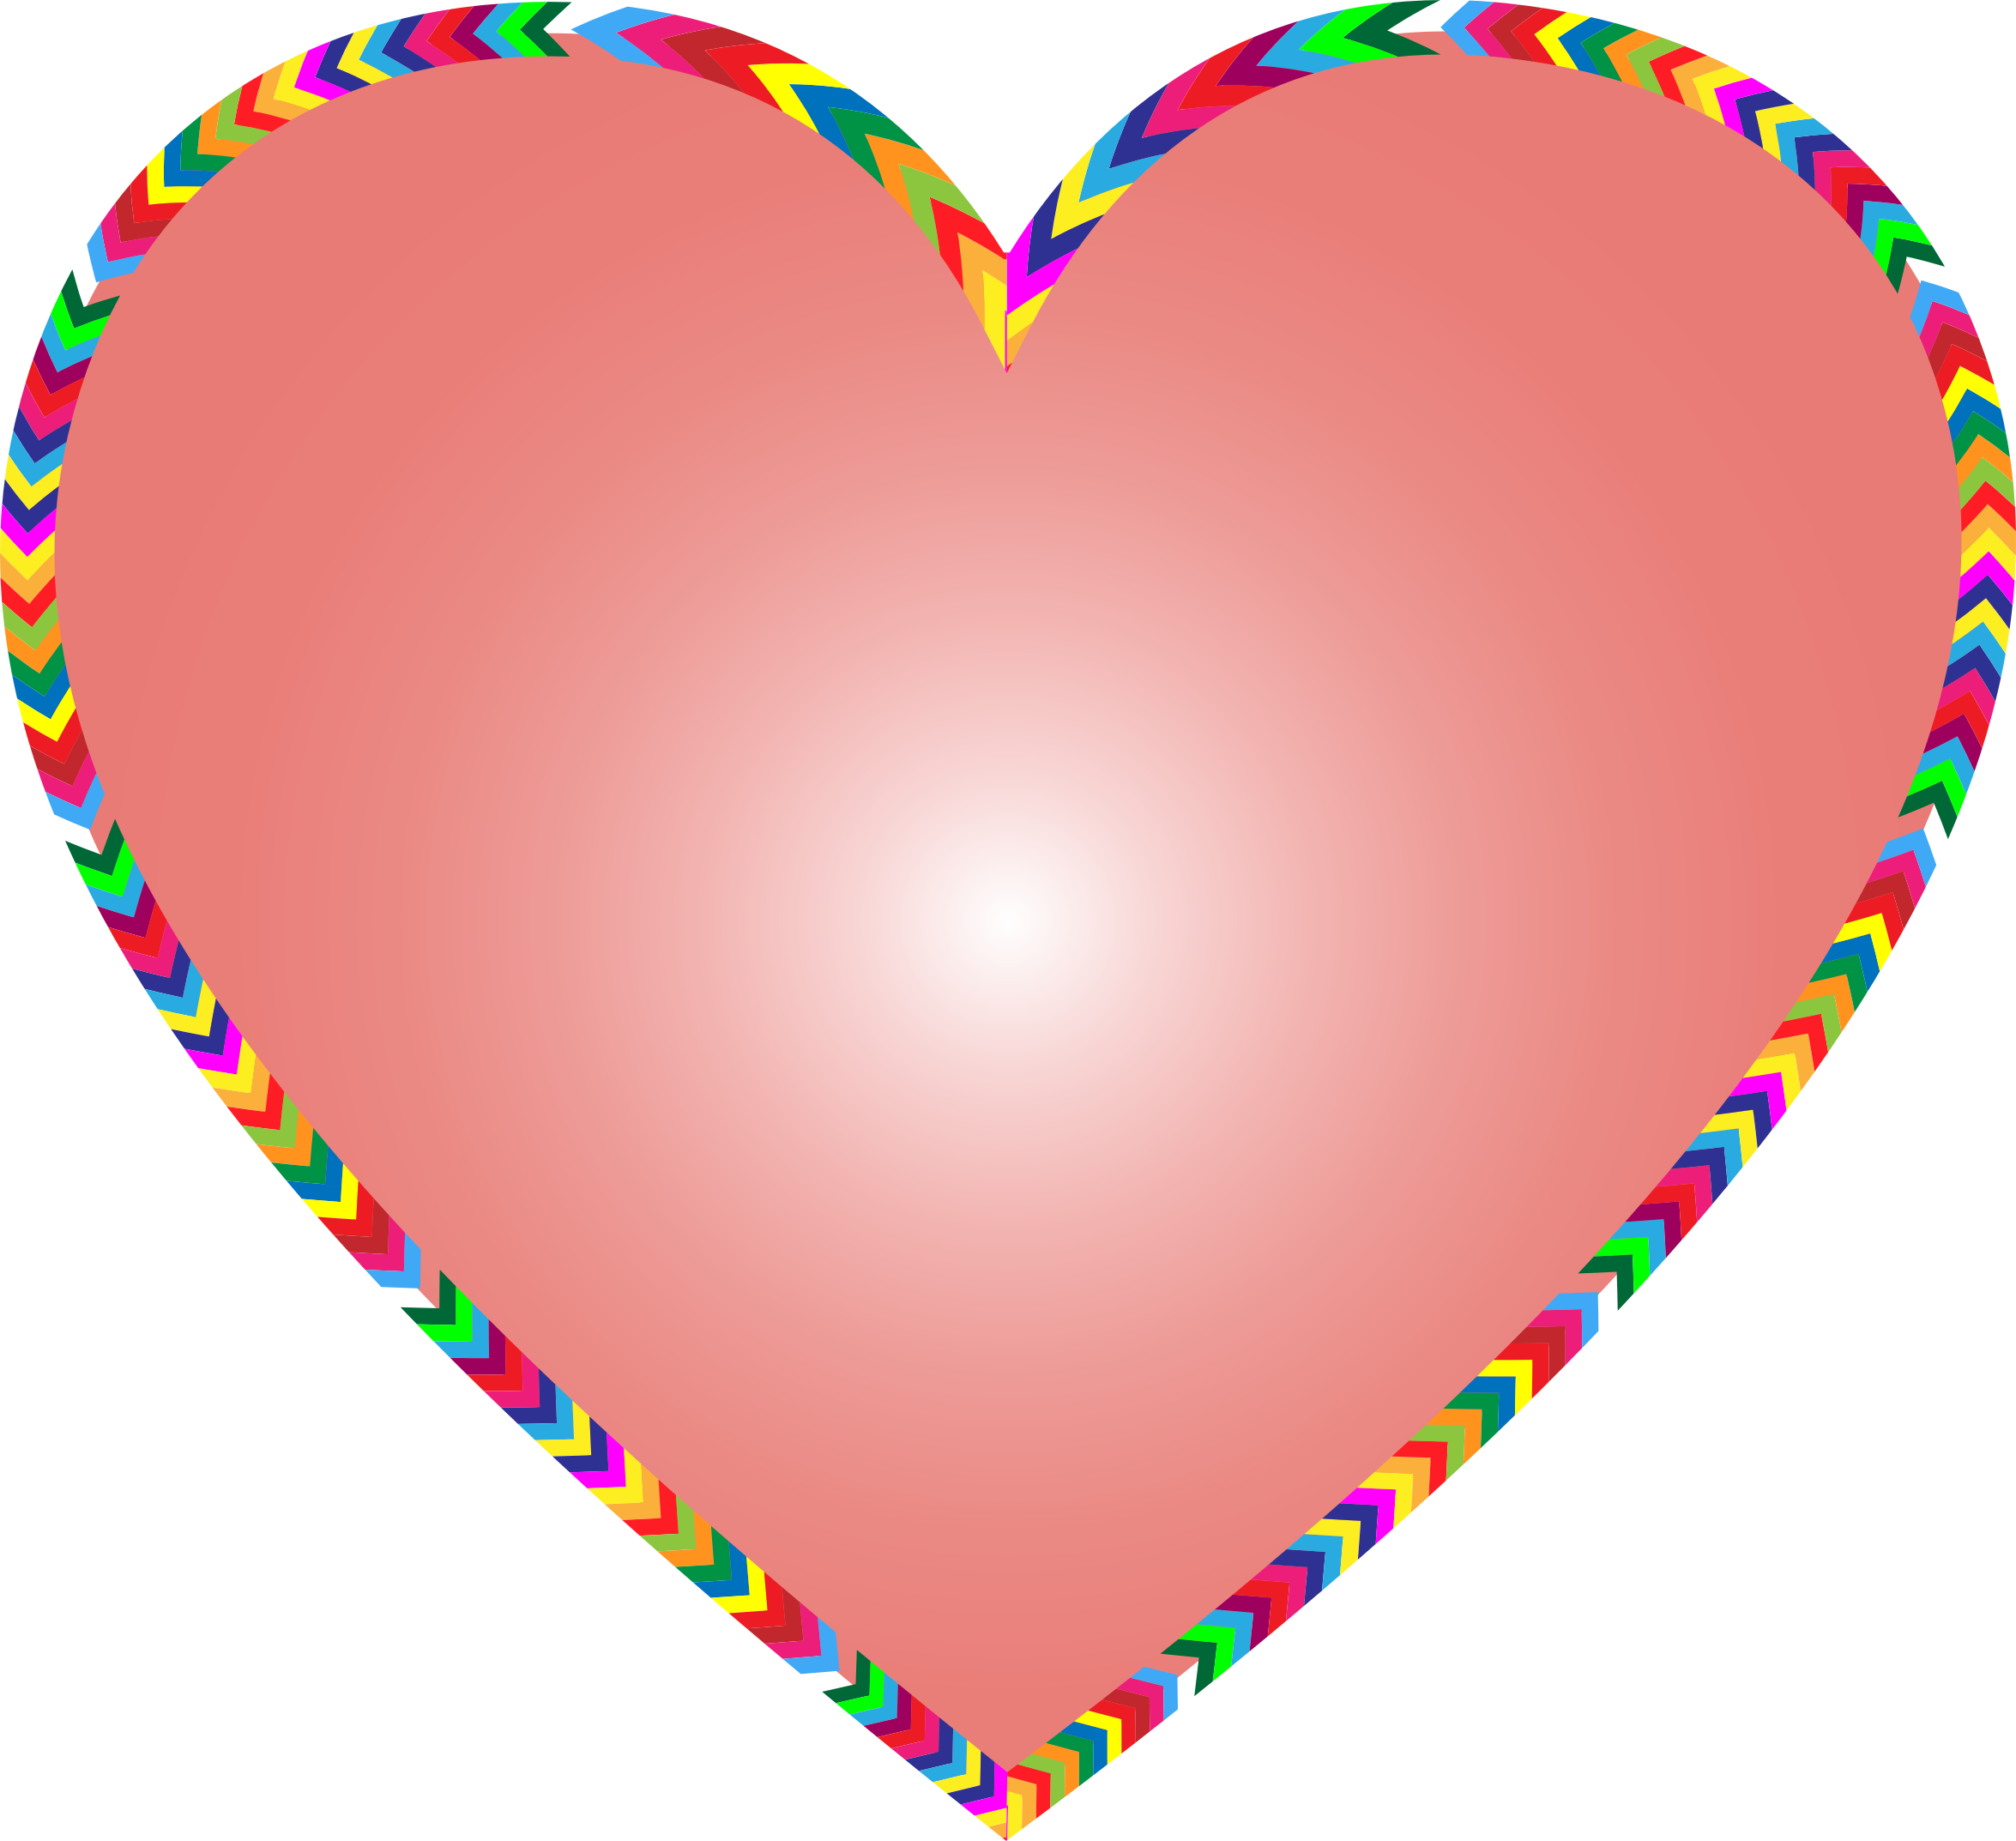 Multicolored Heart Border Graphic PNG